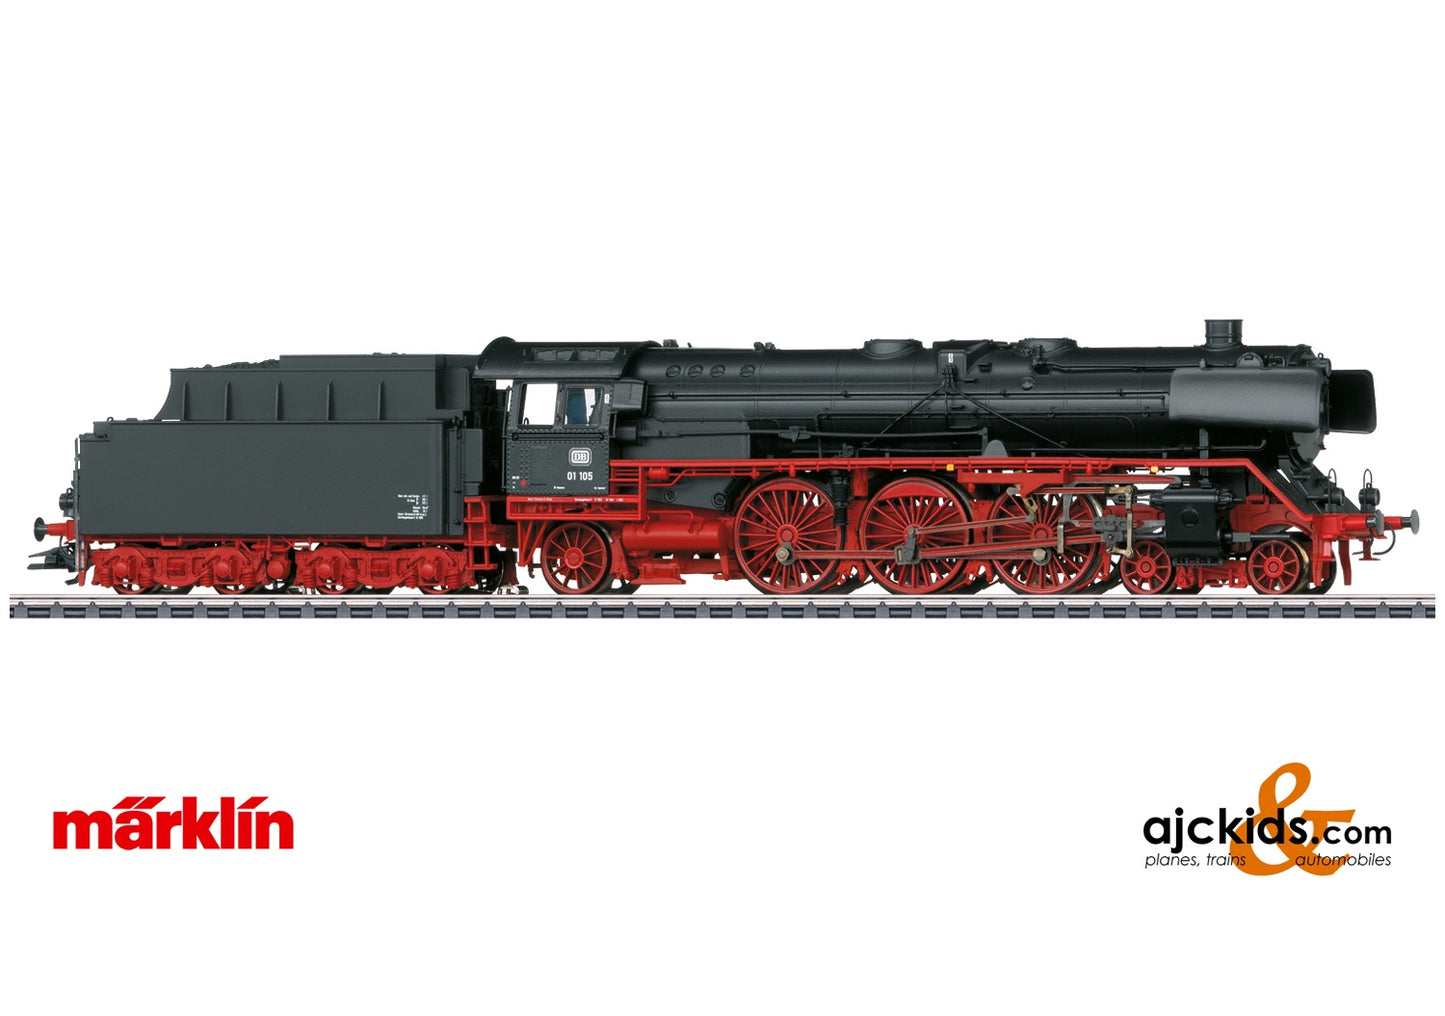 Marklin 39004 - Class 01 Steam Locomotive at Ajckids.com